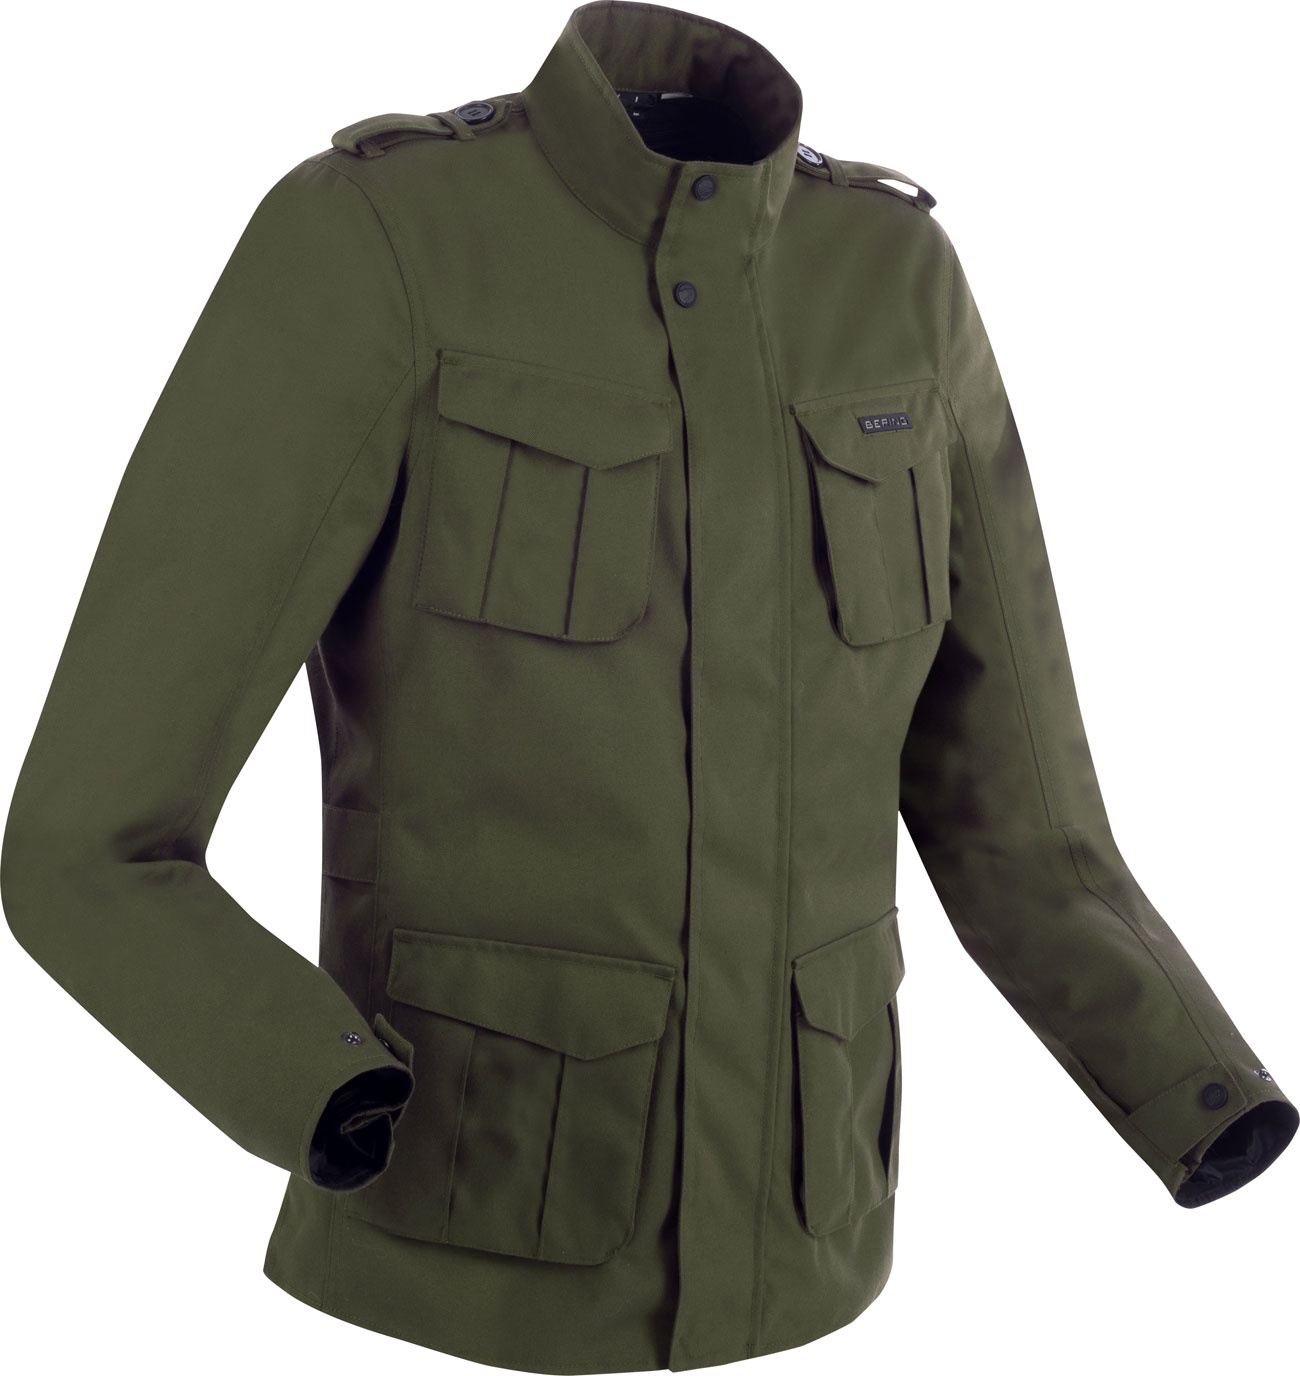 Bering Norris Evo, veste textile imperméable - Olive - S